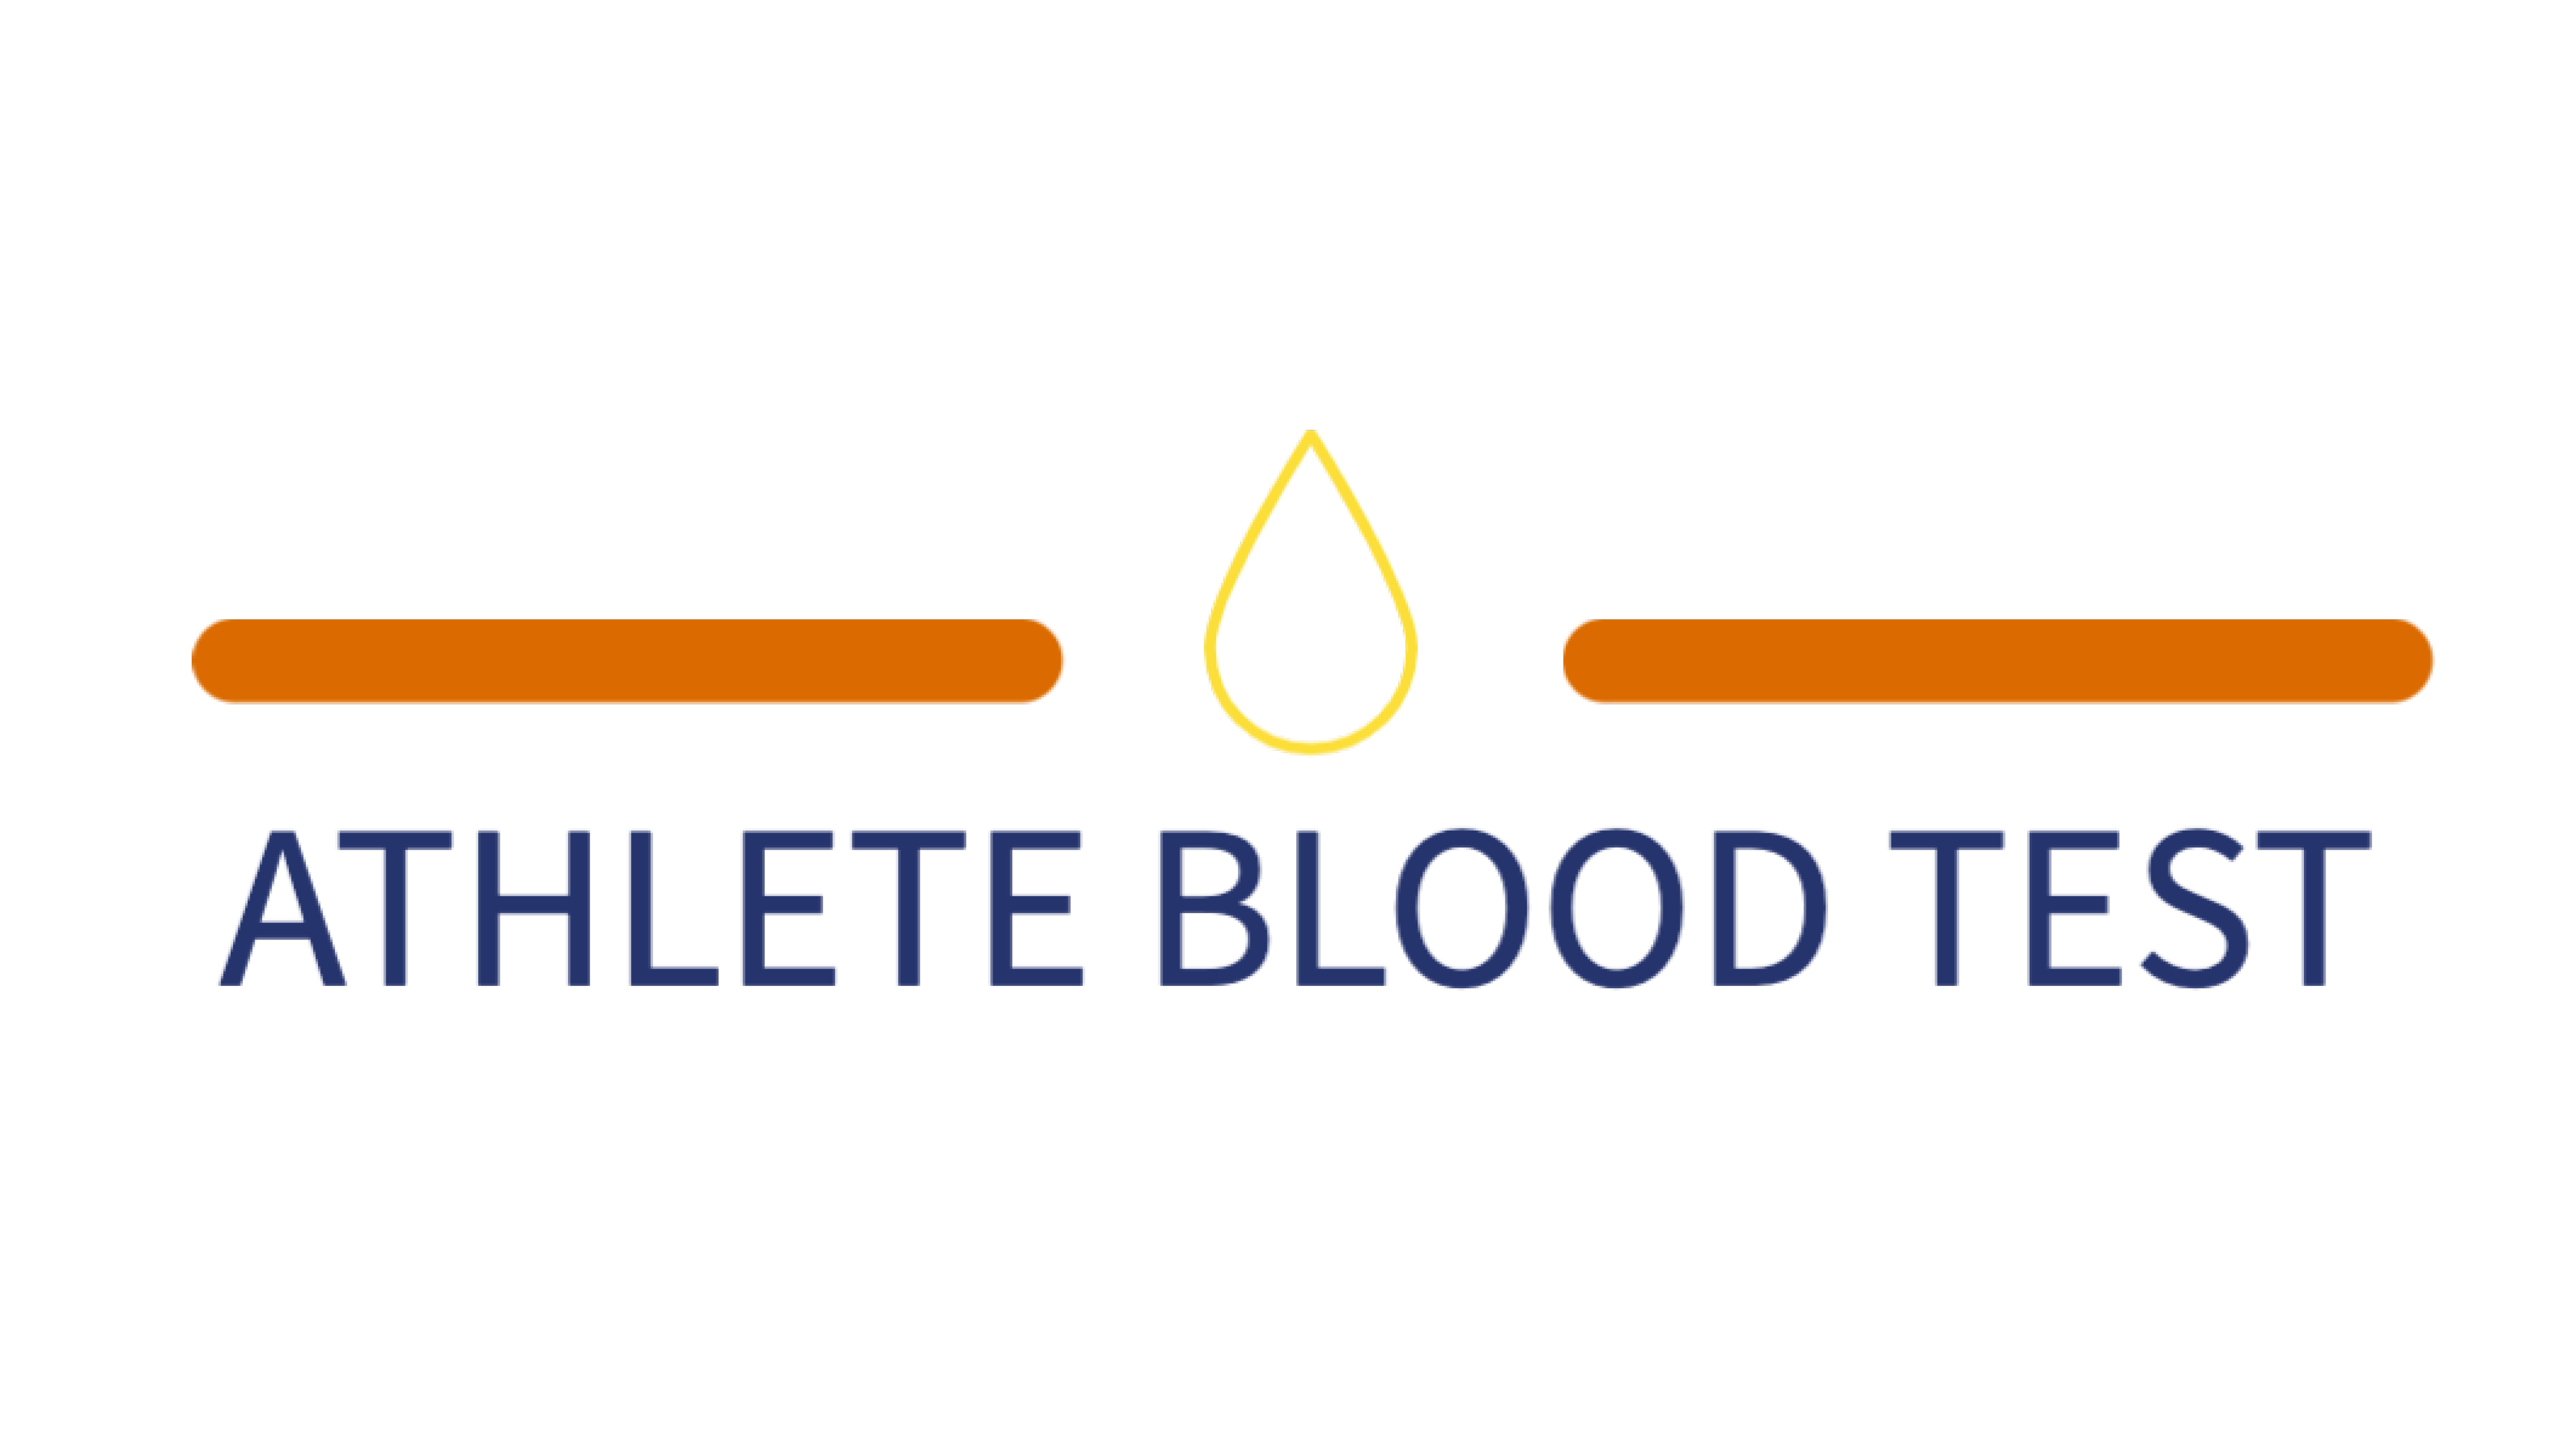 Athlete Blood Test logo